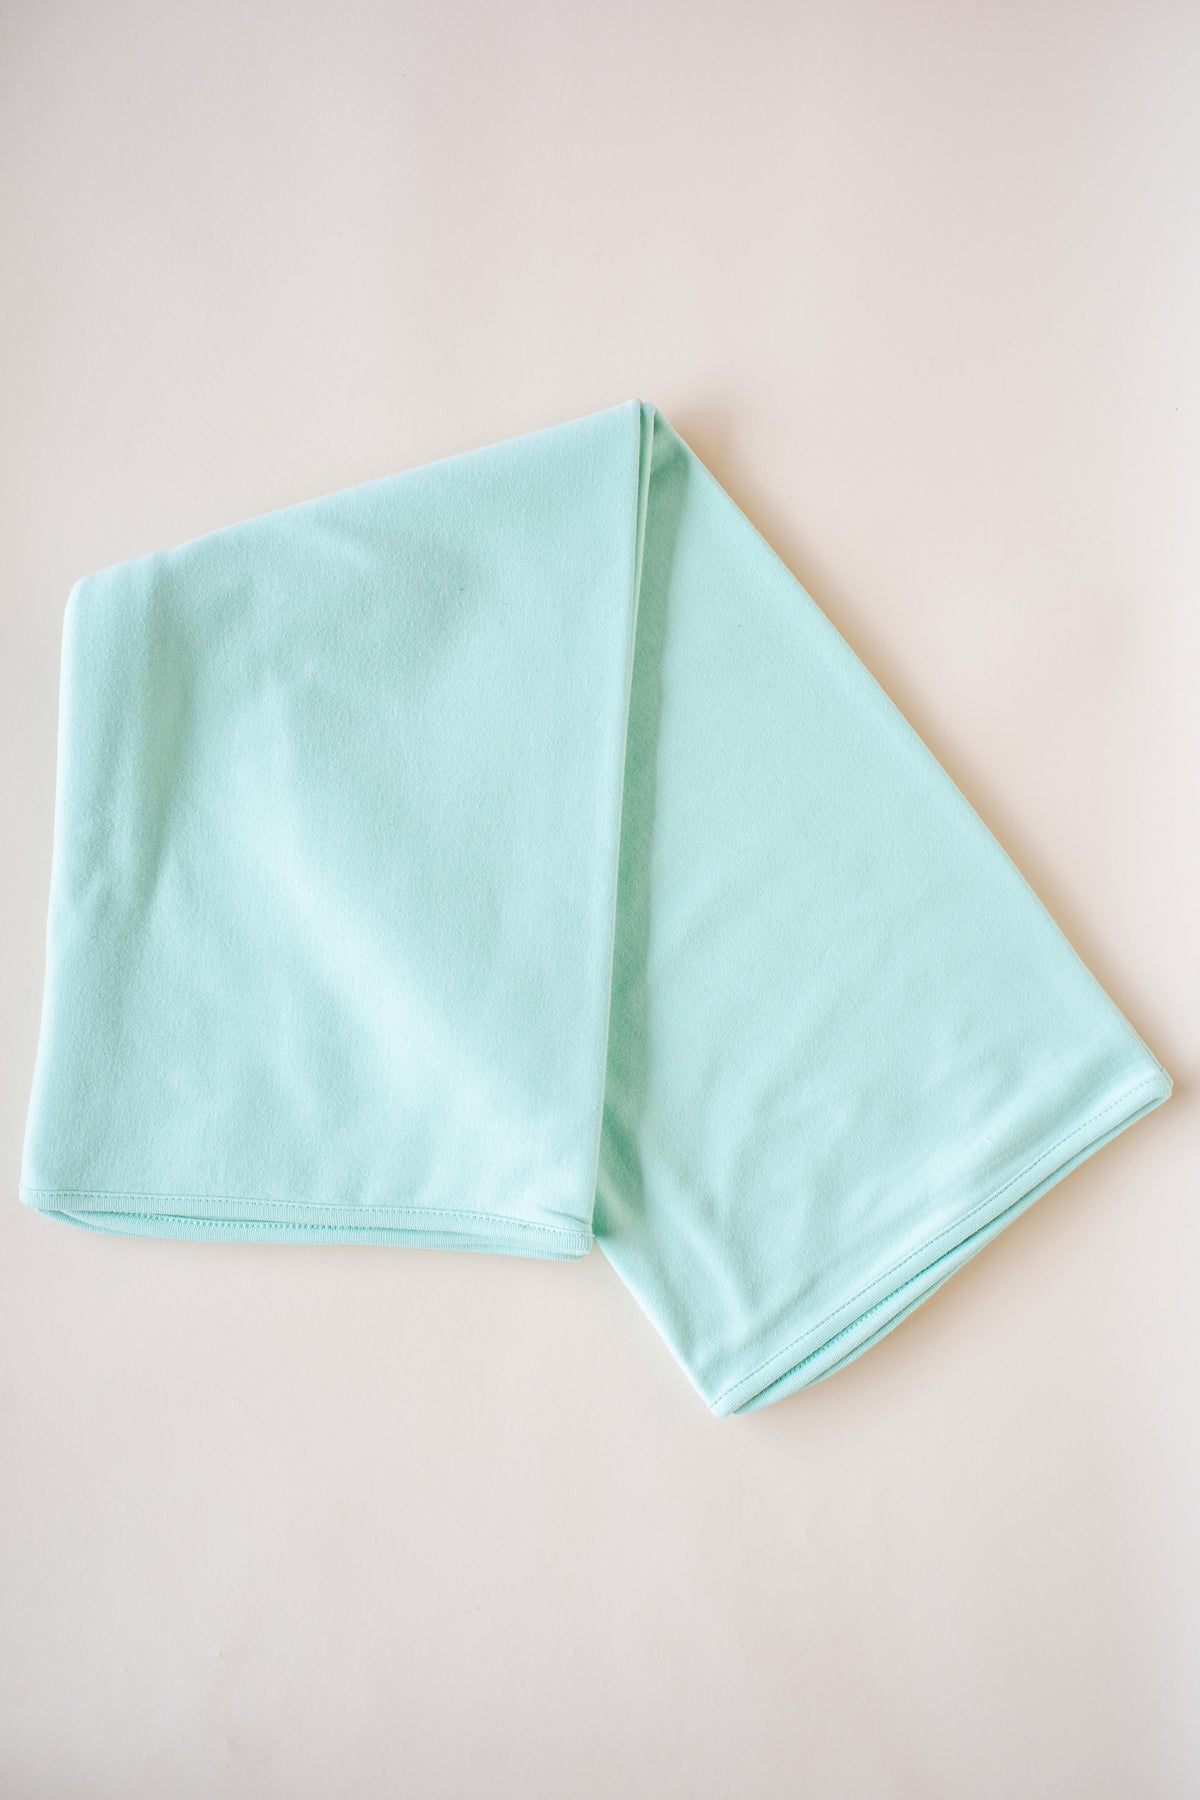 Plain Baby Blankets